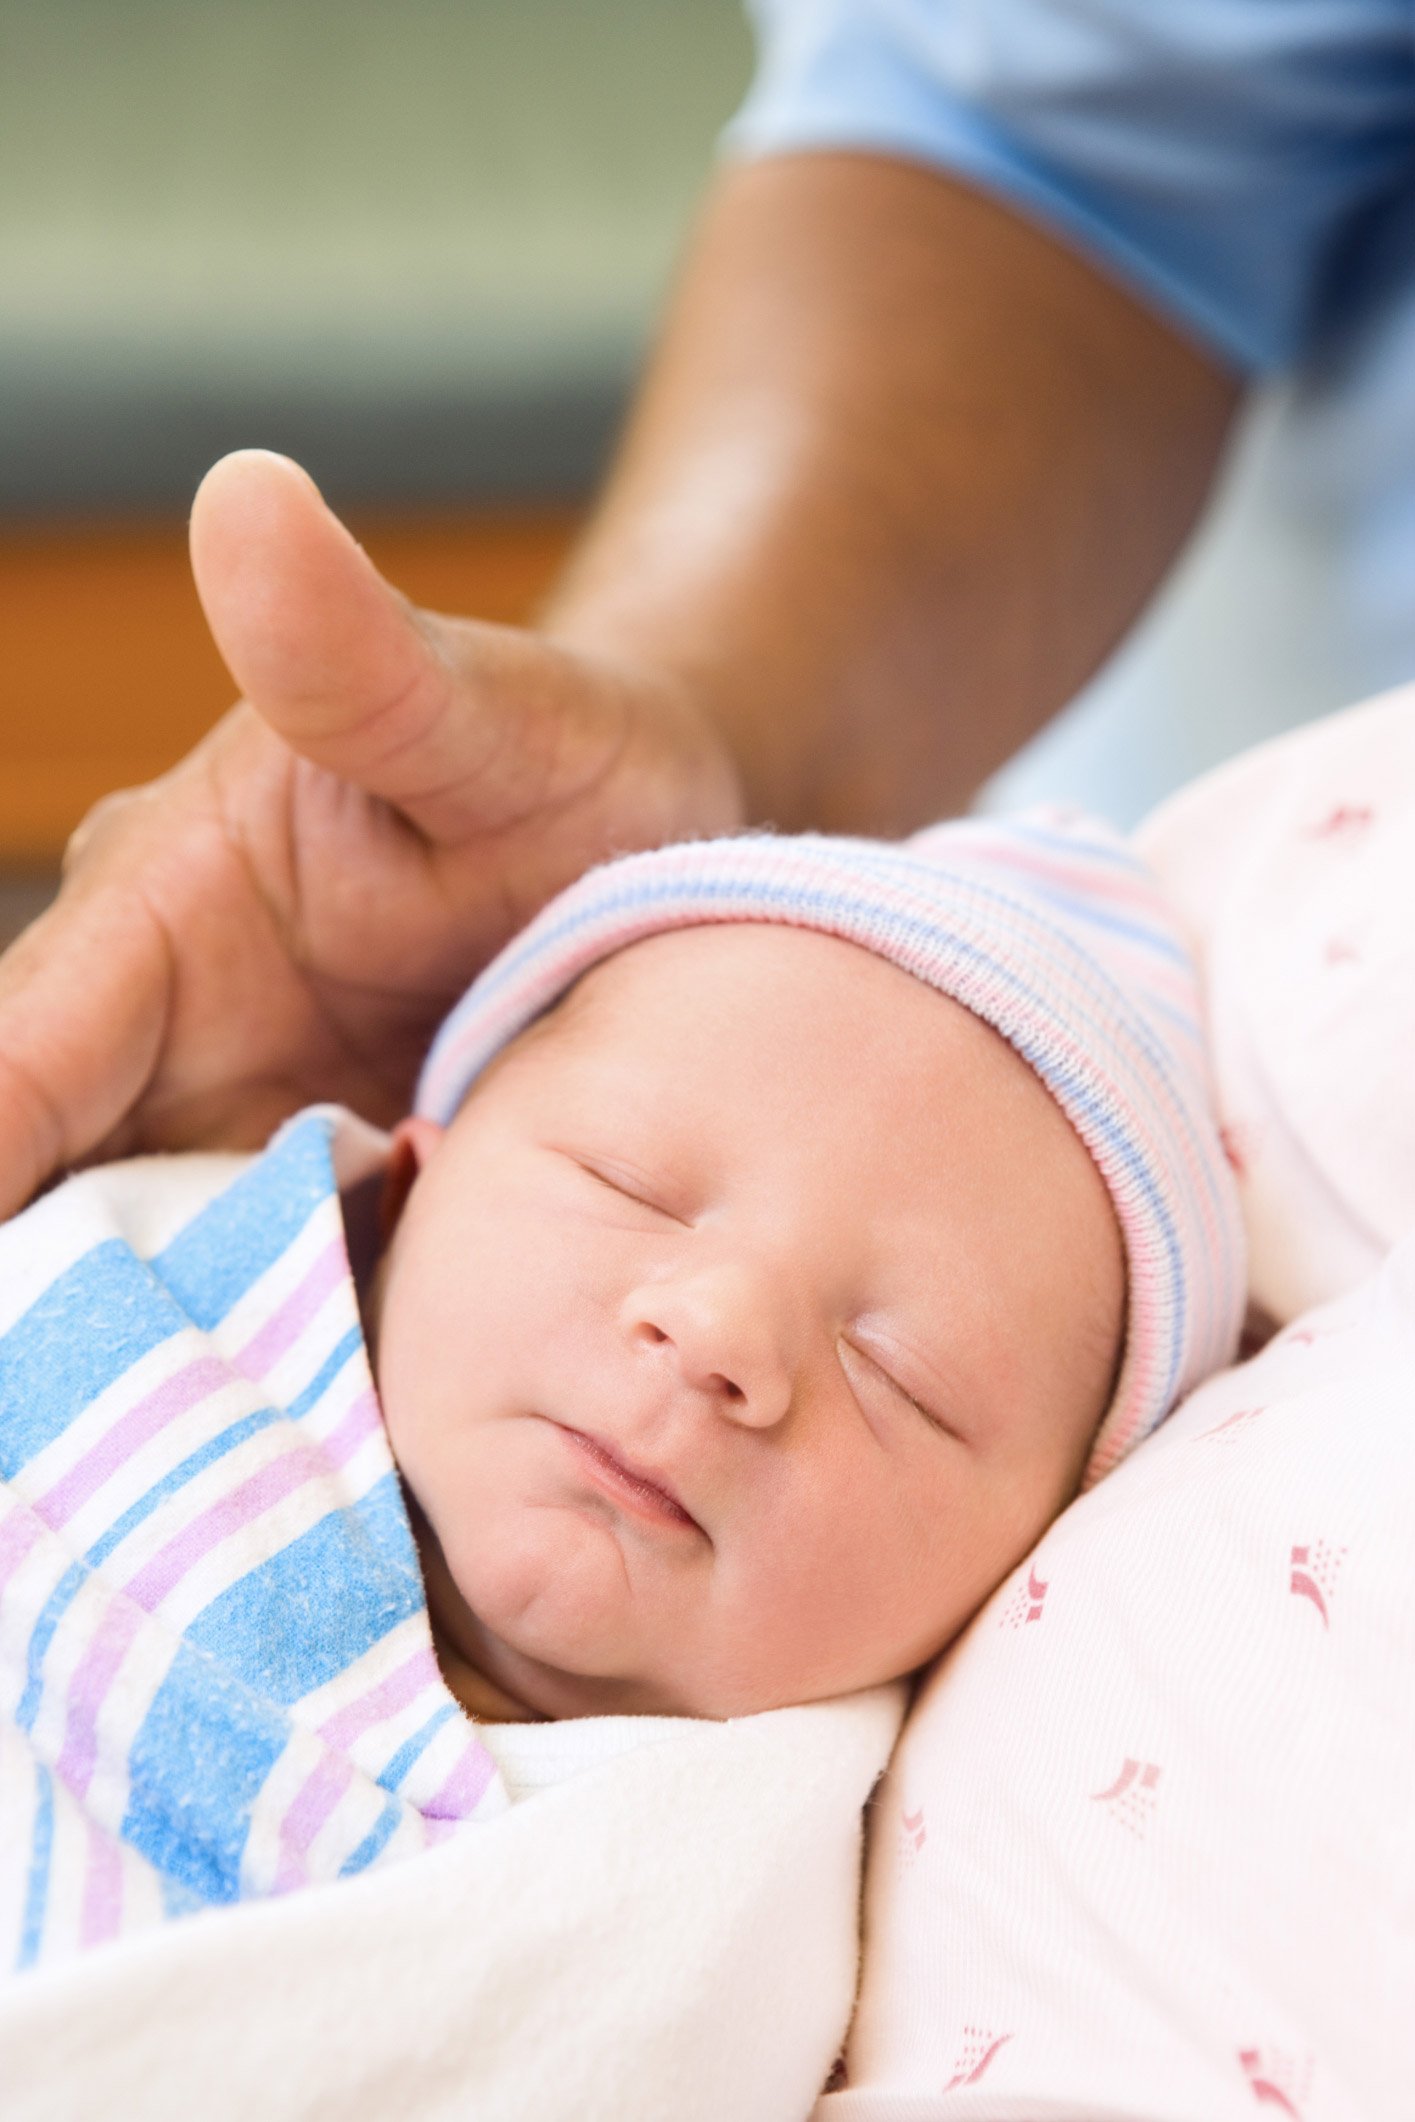 Treating Low Blood Sugar in Newborns